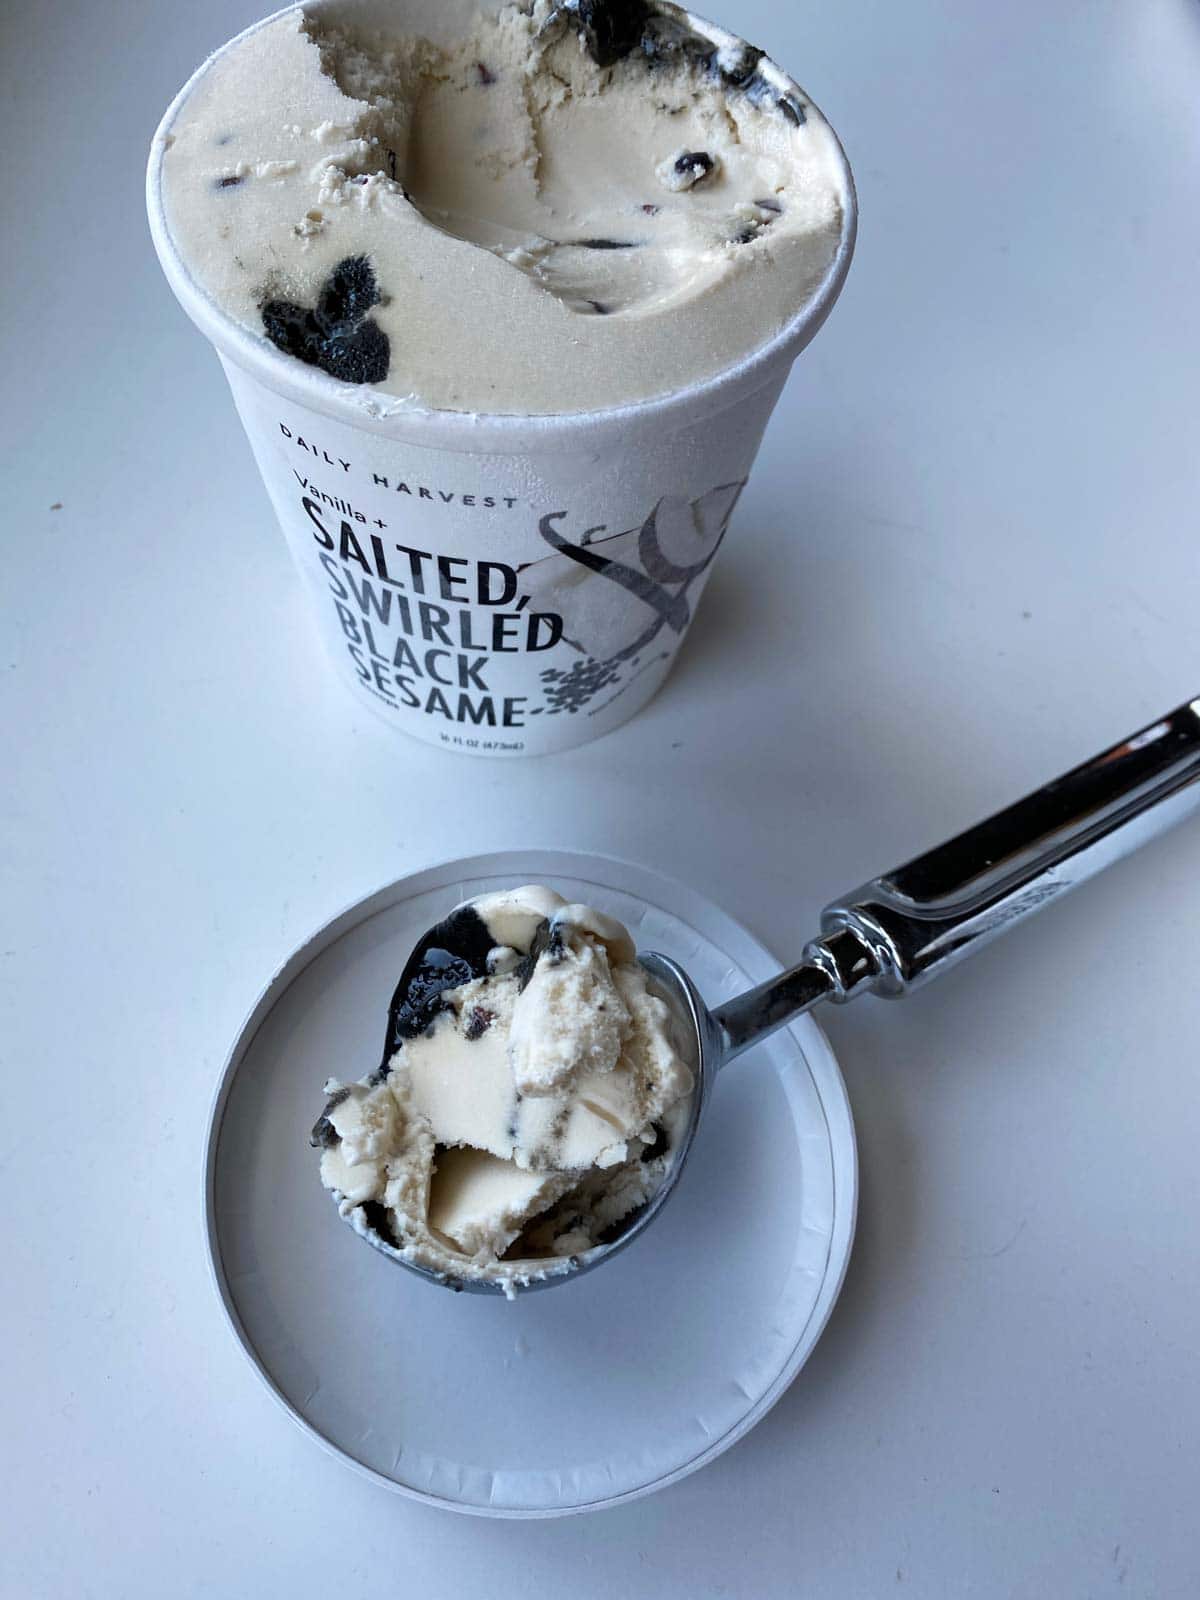 vanilla and salted black sesame swirl scoops from daily harvest - vegan ice cream